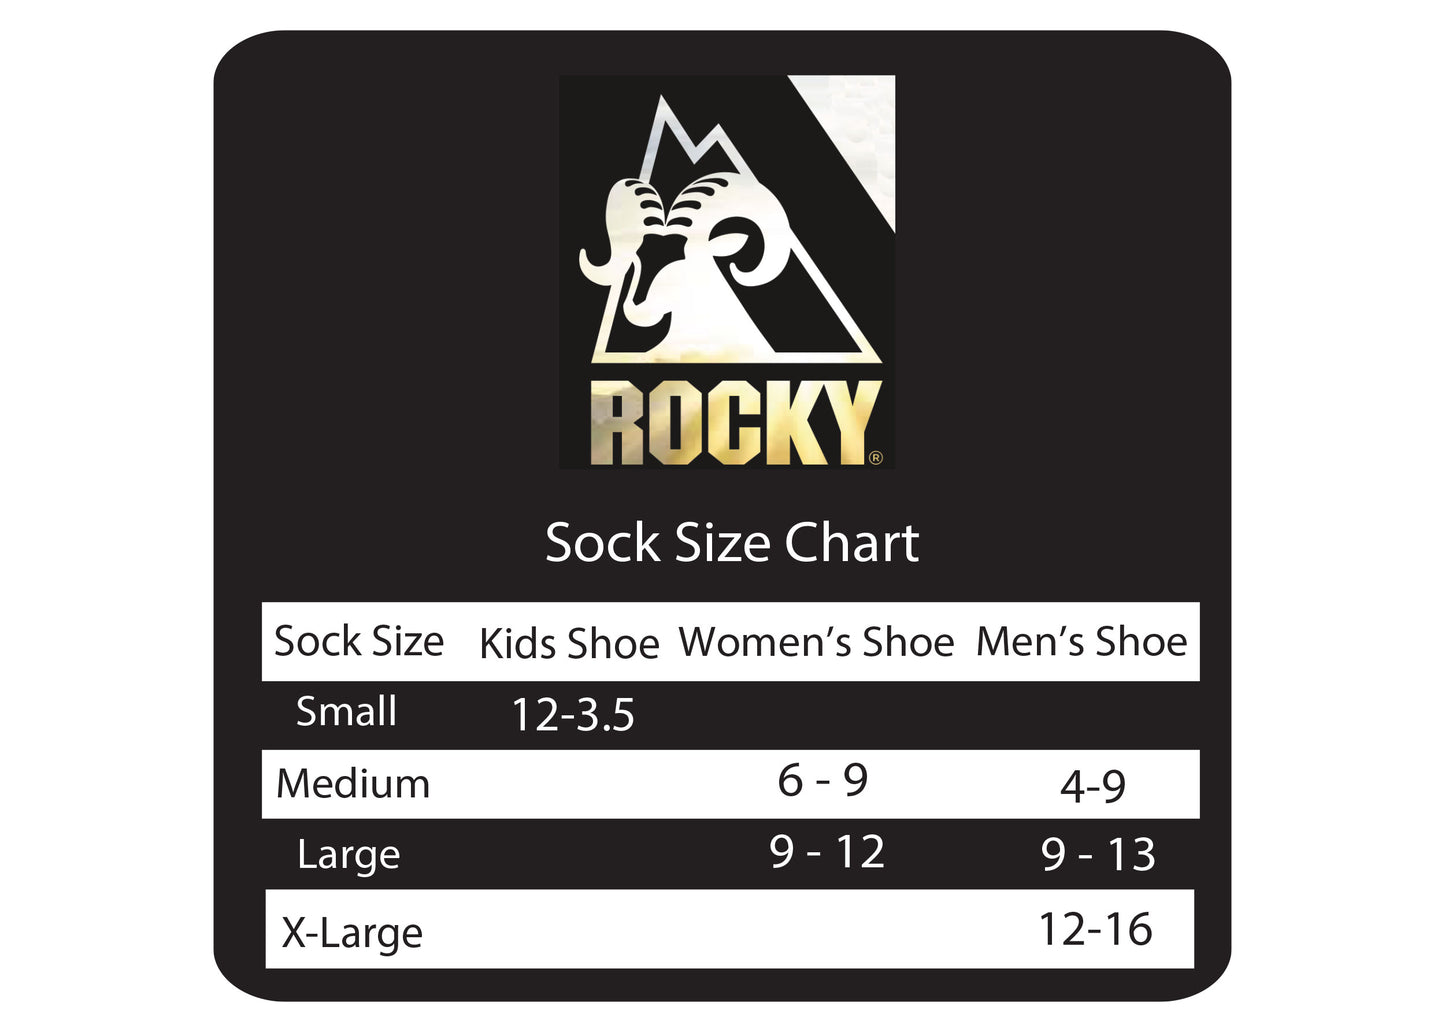 Rocky Mens Cotton Full Cushion Low Cut Heel Tab Socks 3 Pair Pack